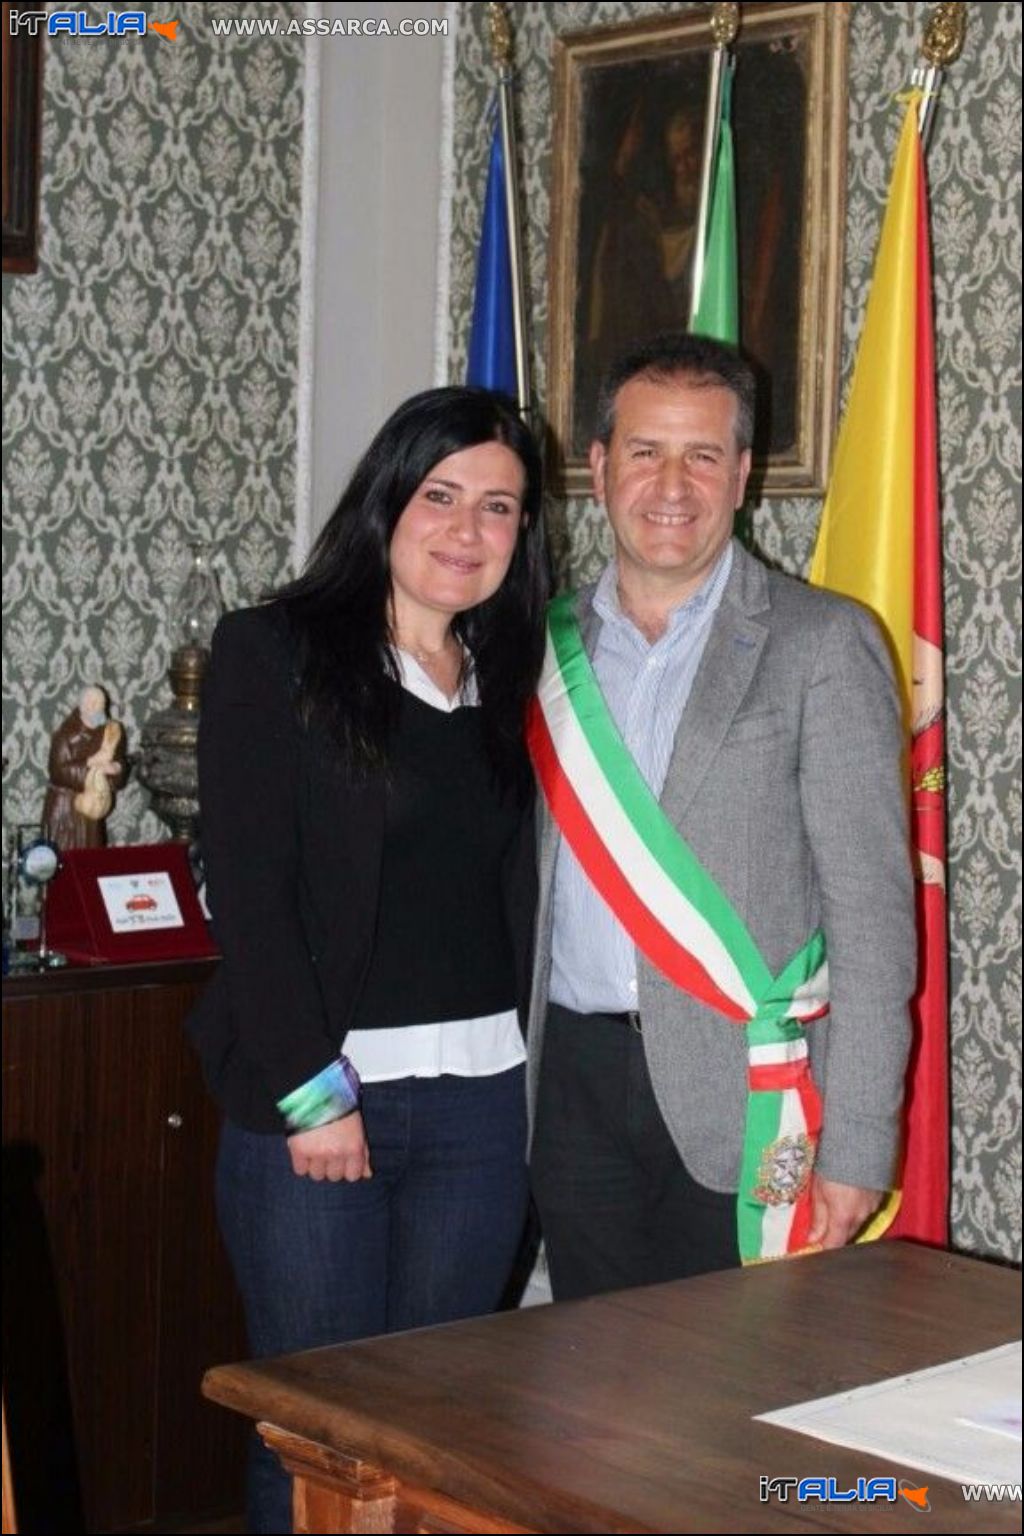 Il sindaco consegna cittadinanza italiana